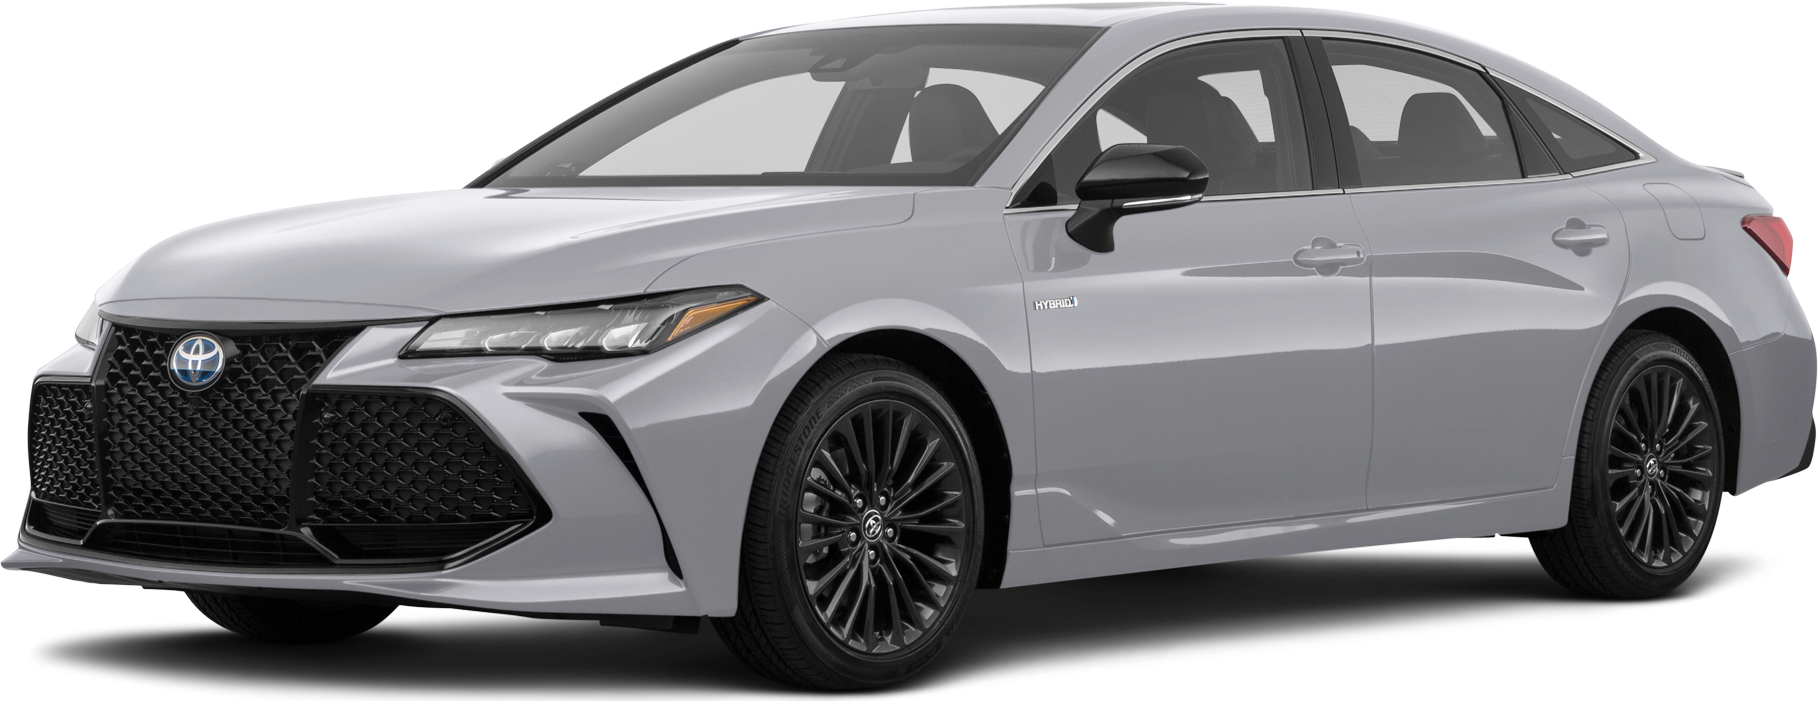 2021 Toyota Avalon Hybrid review: Soft-serve sedan - CNET